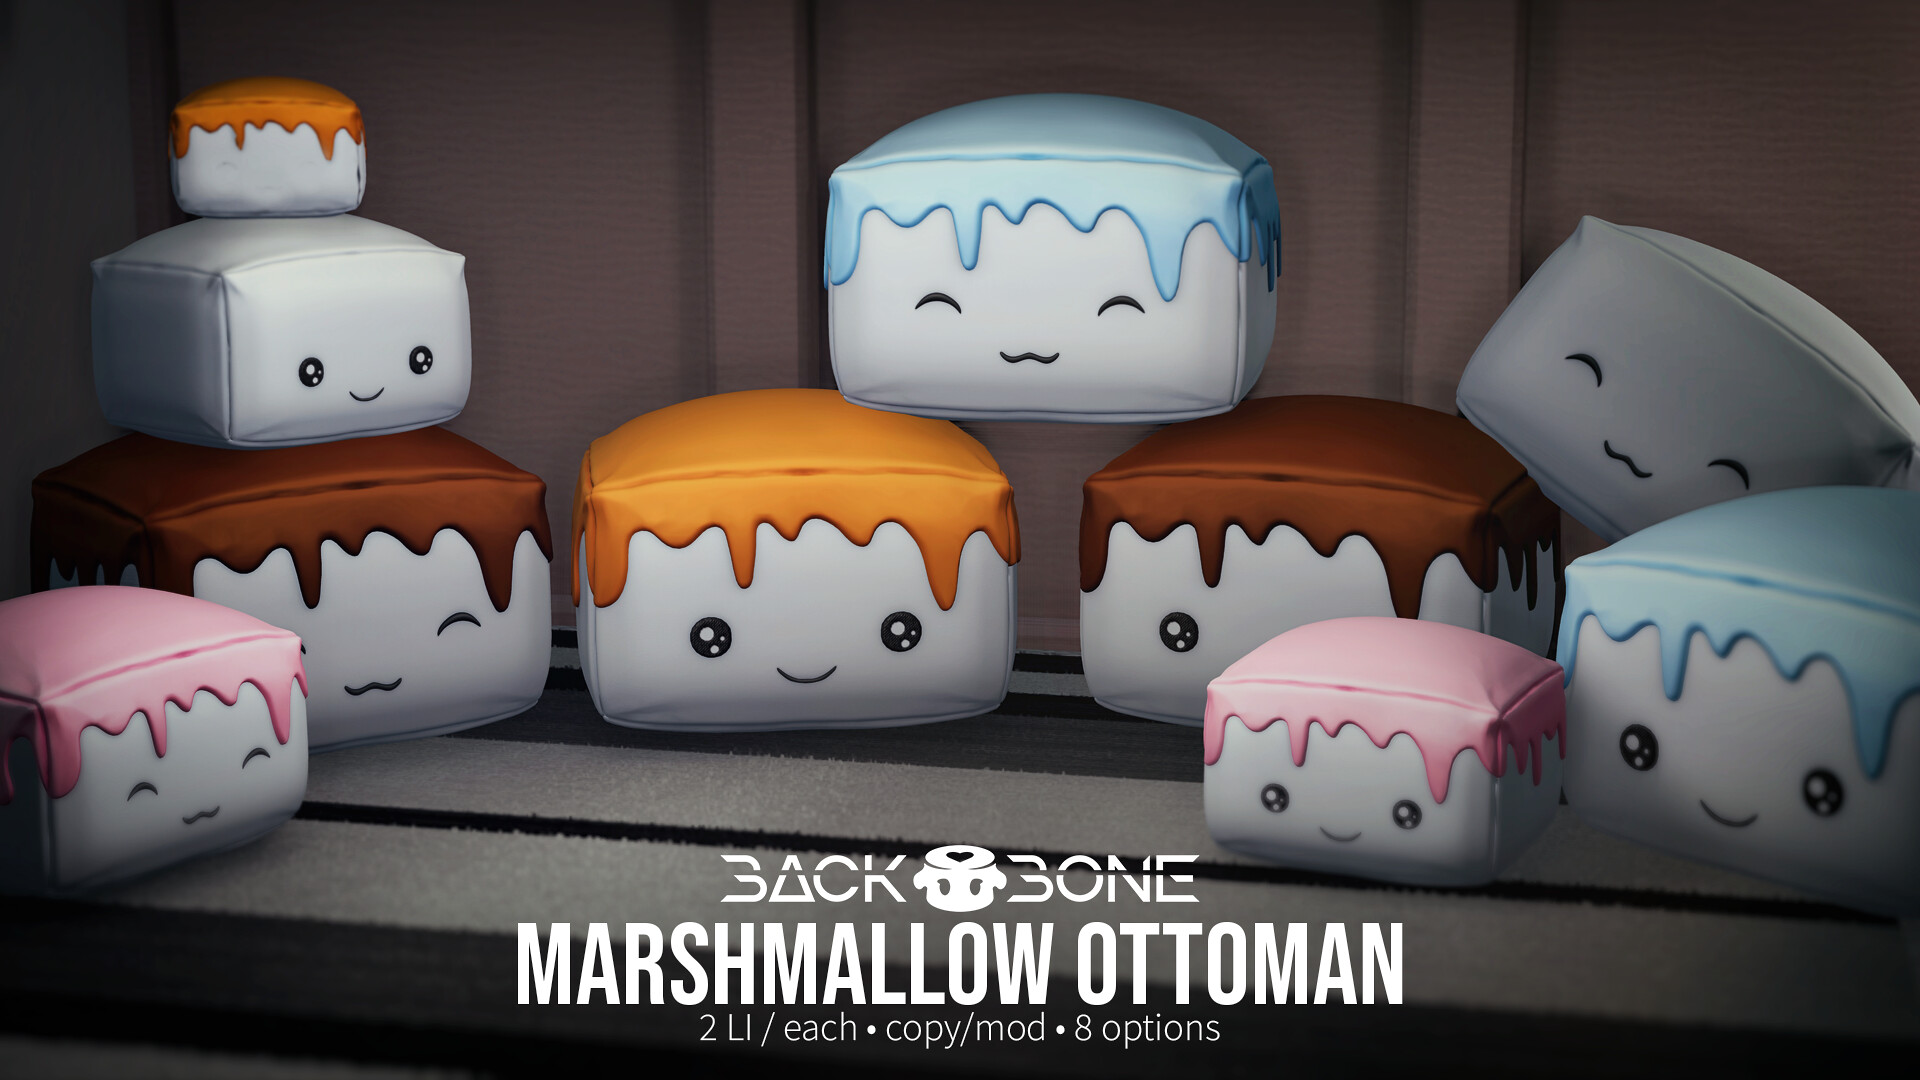 BackBone – Marshmellow Ottoman